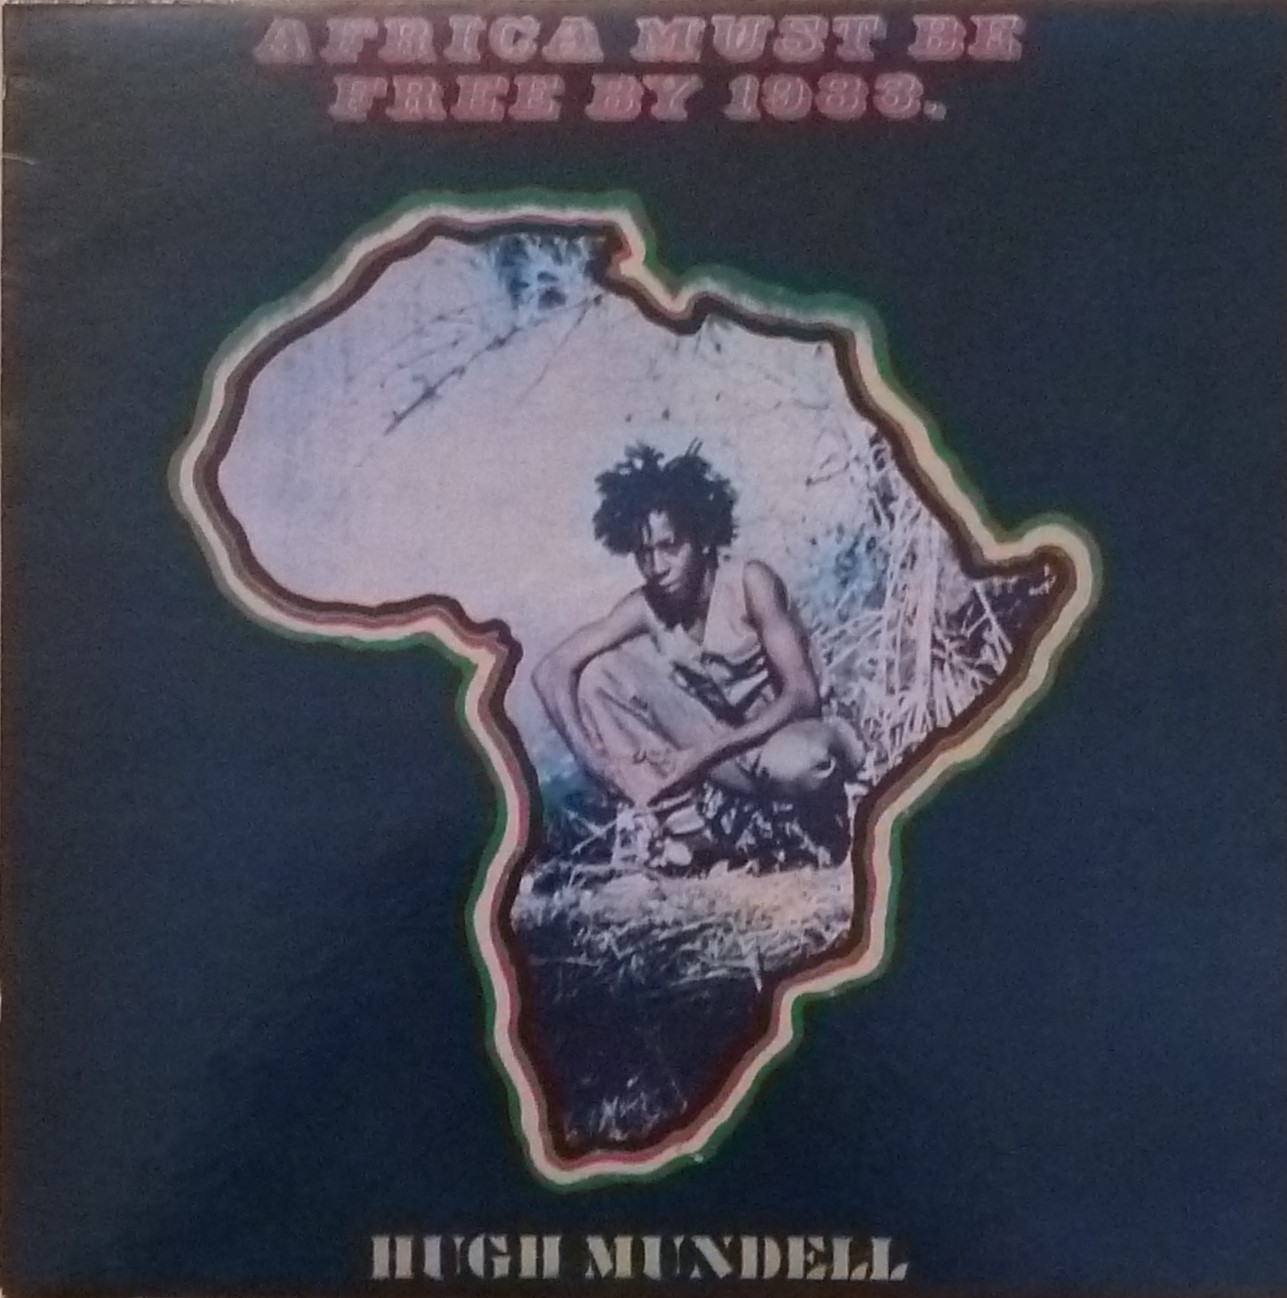 Hugh Mundell, Africa must be free